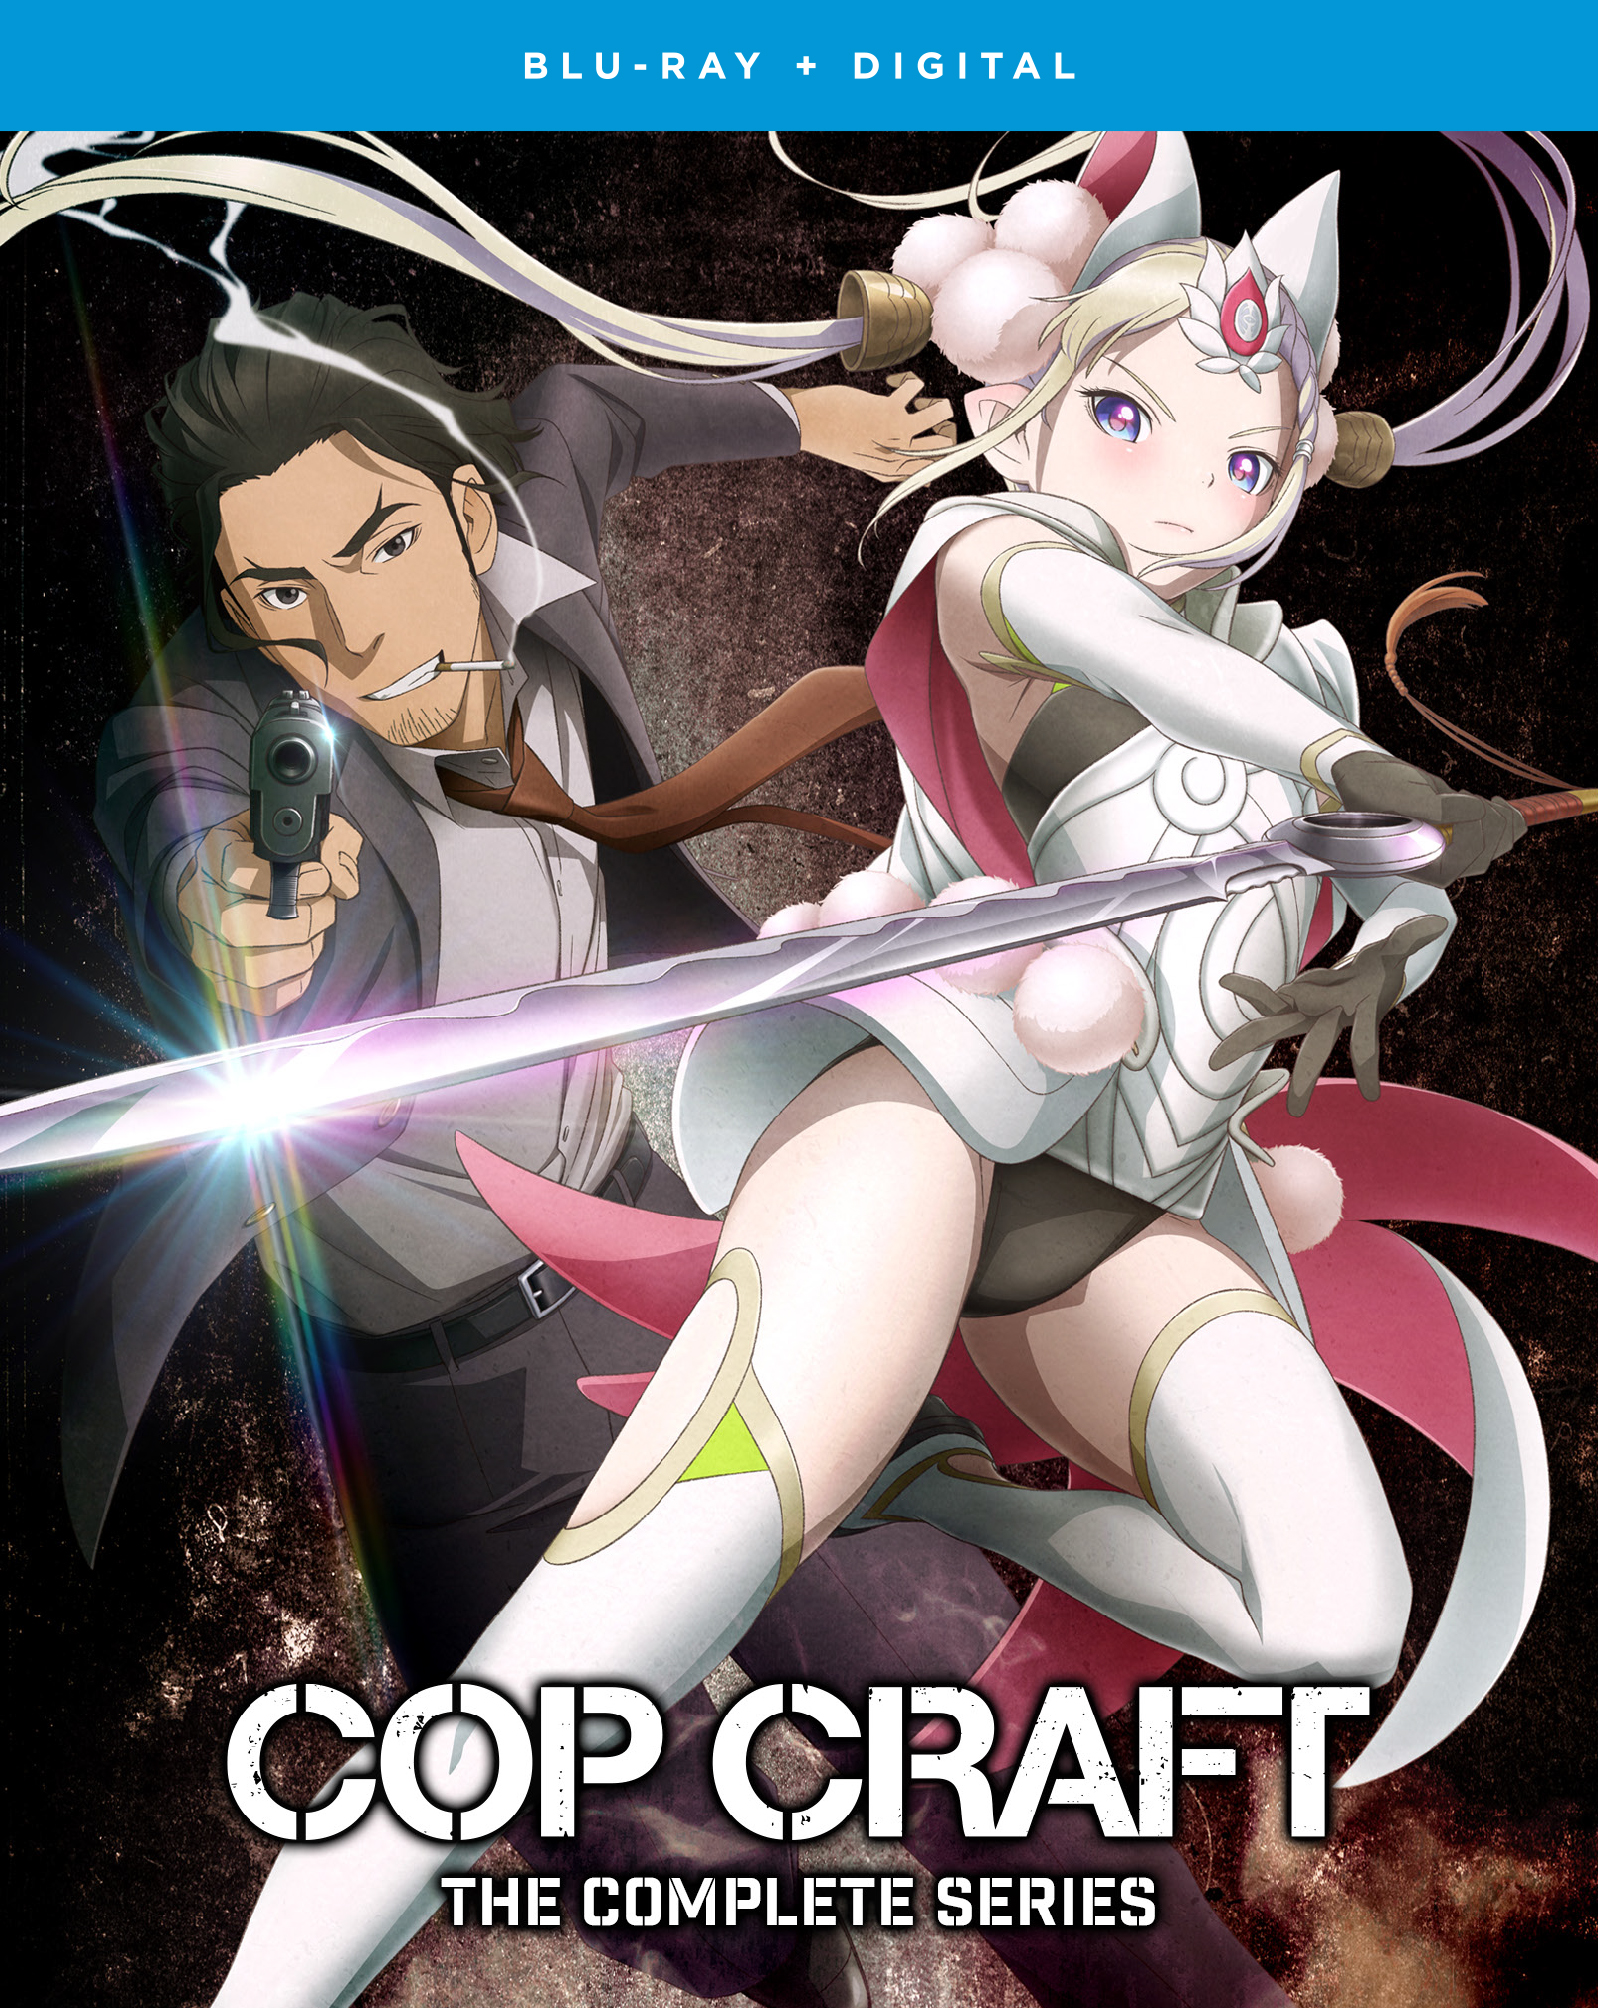 Cop craft manga